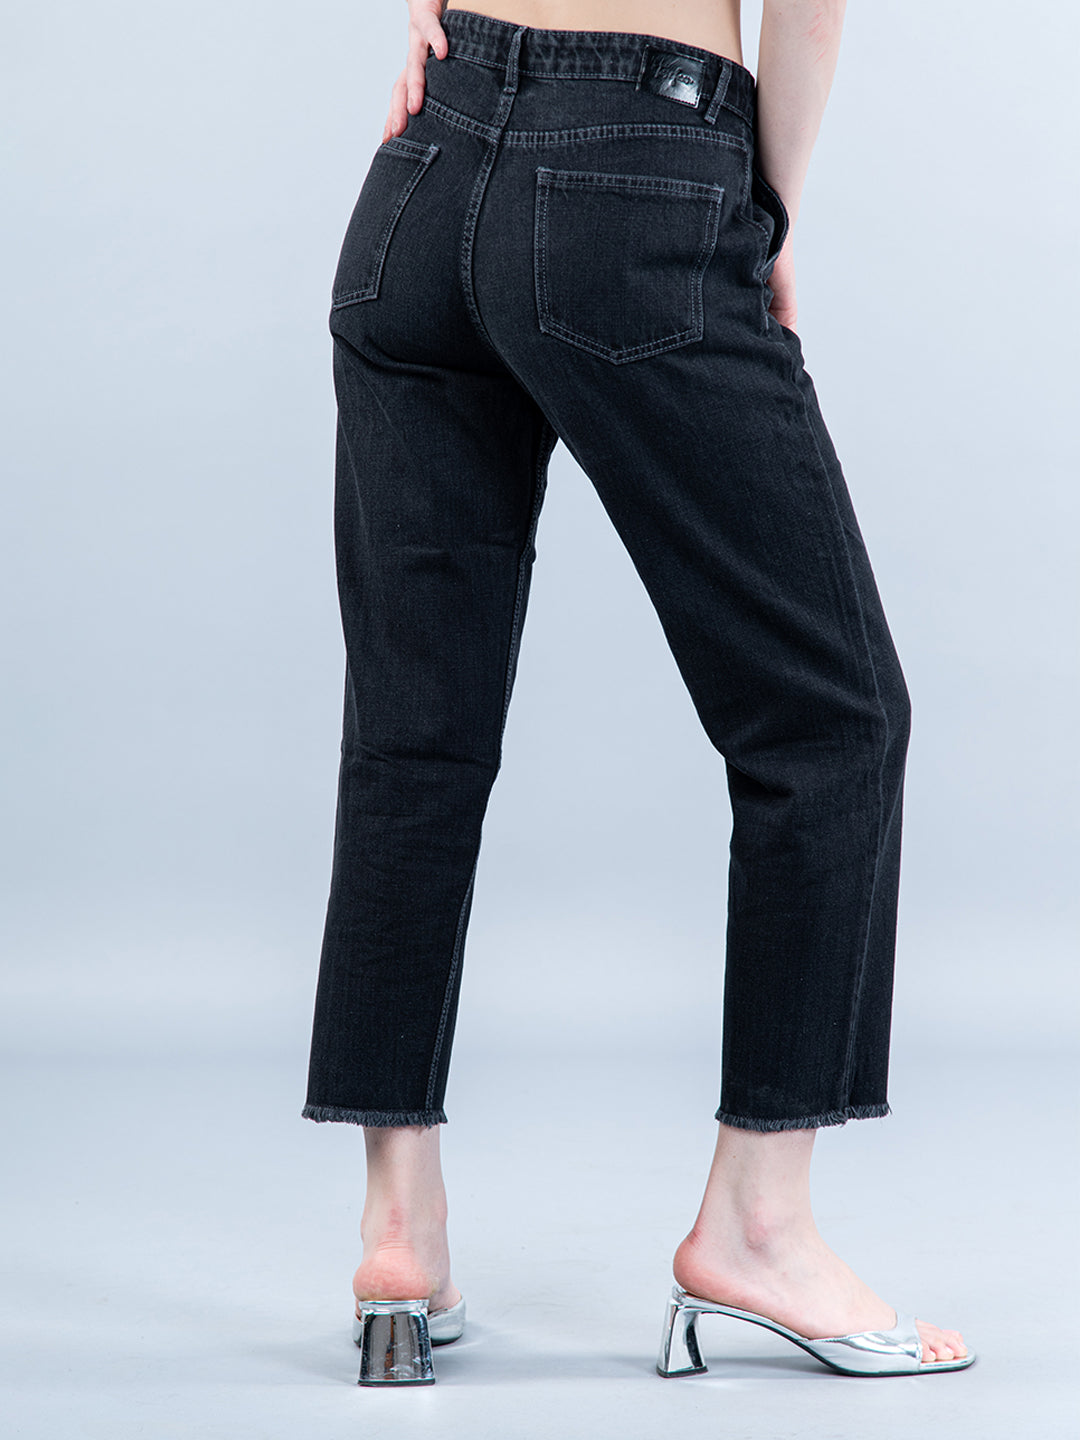 girls jeans brand